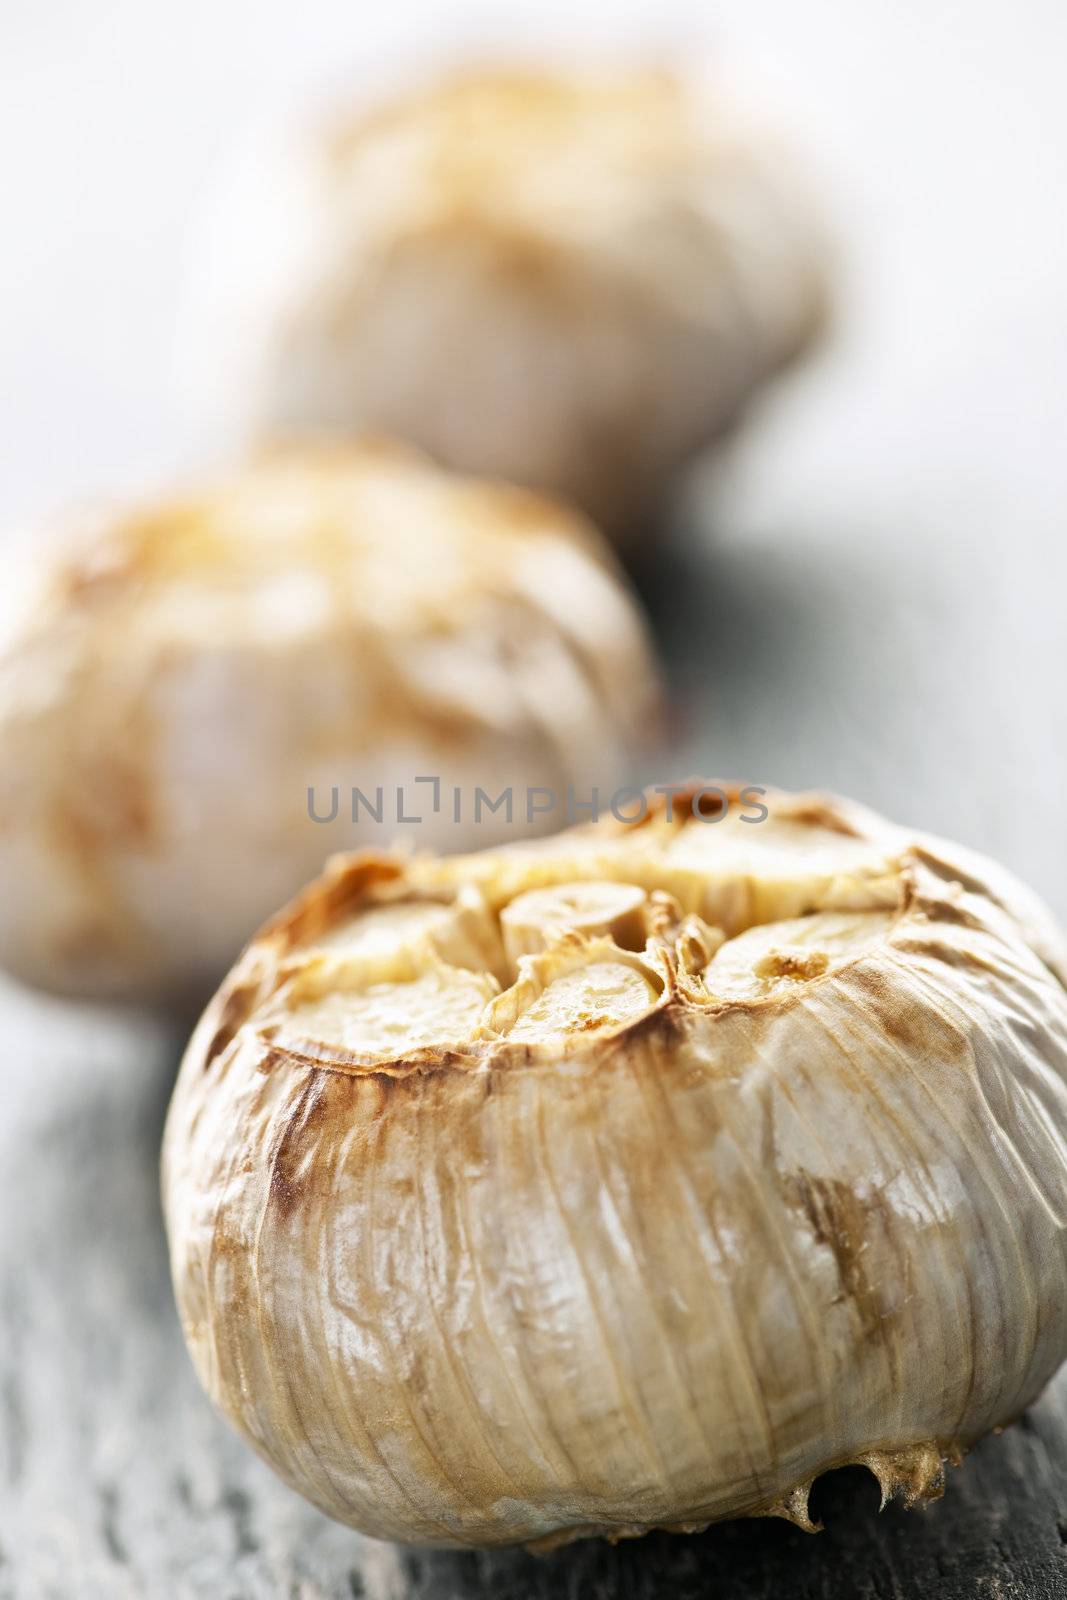 Roasted garlic bulbs by elenathewise